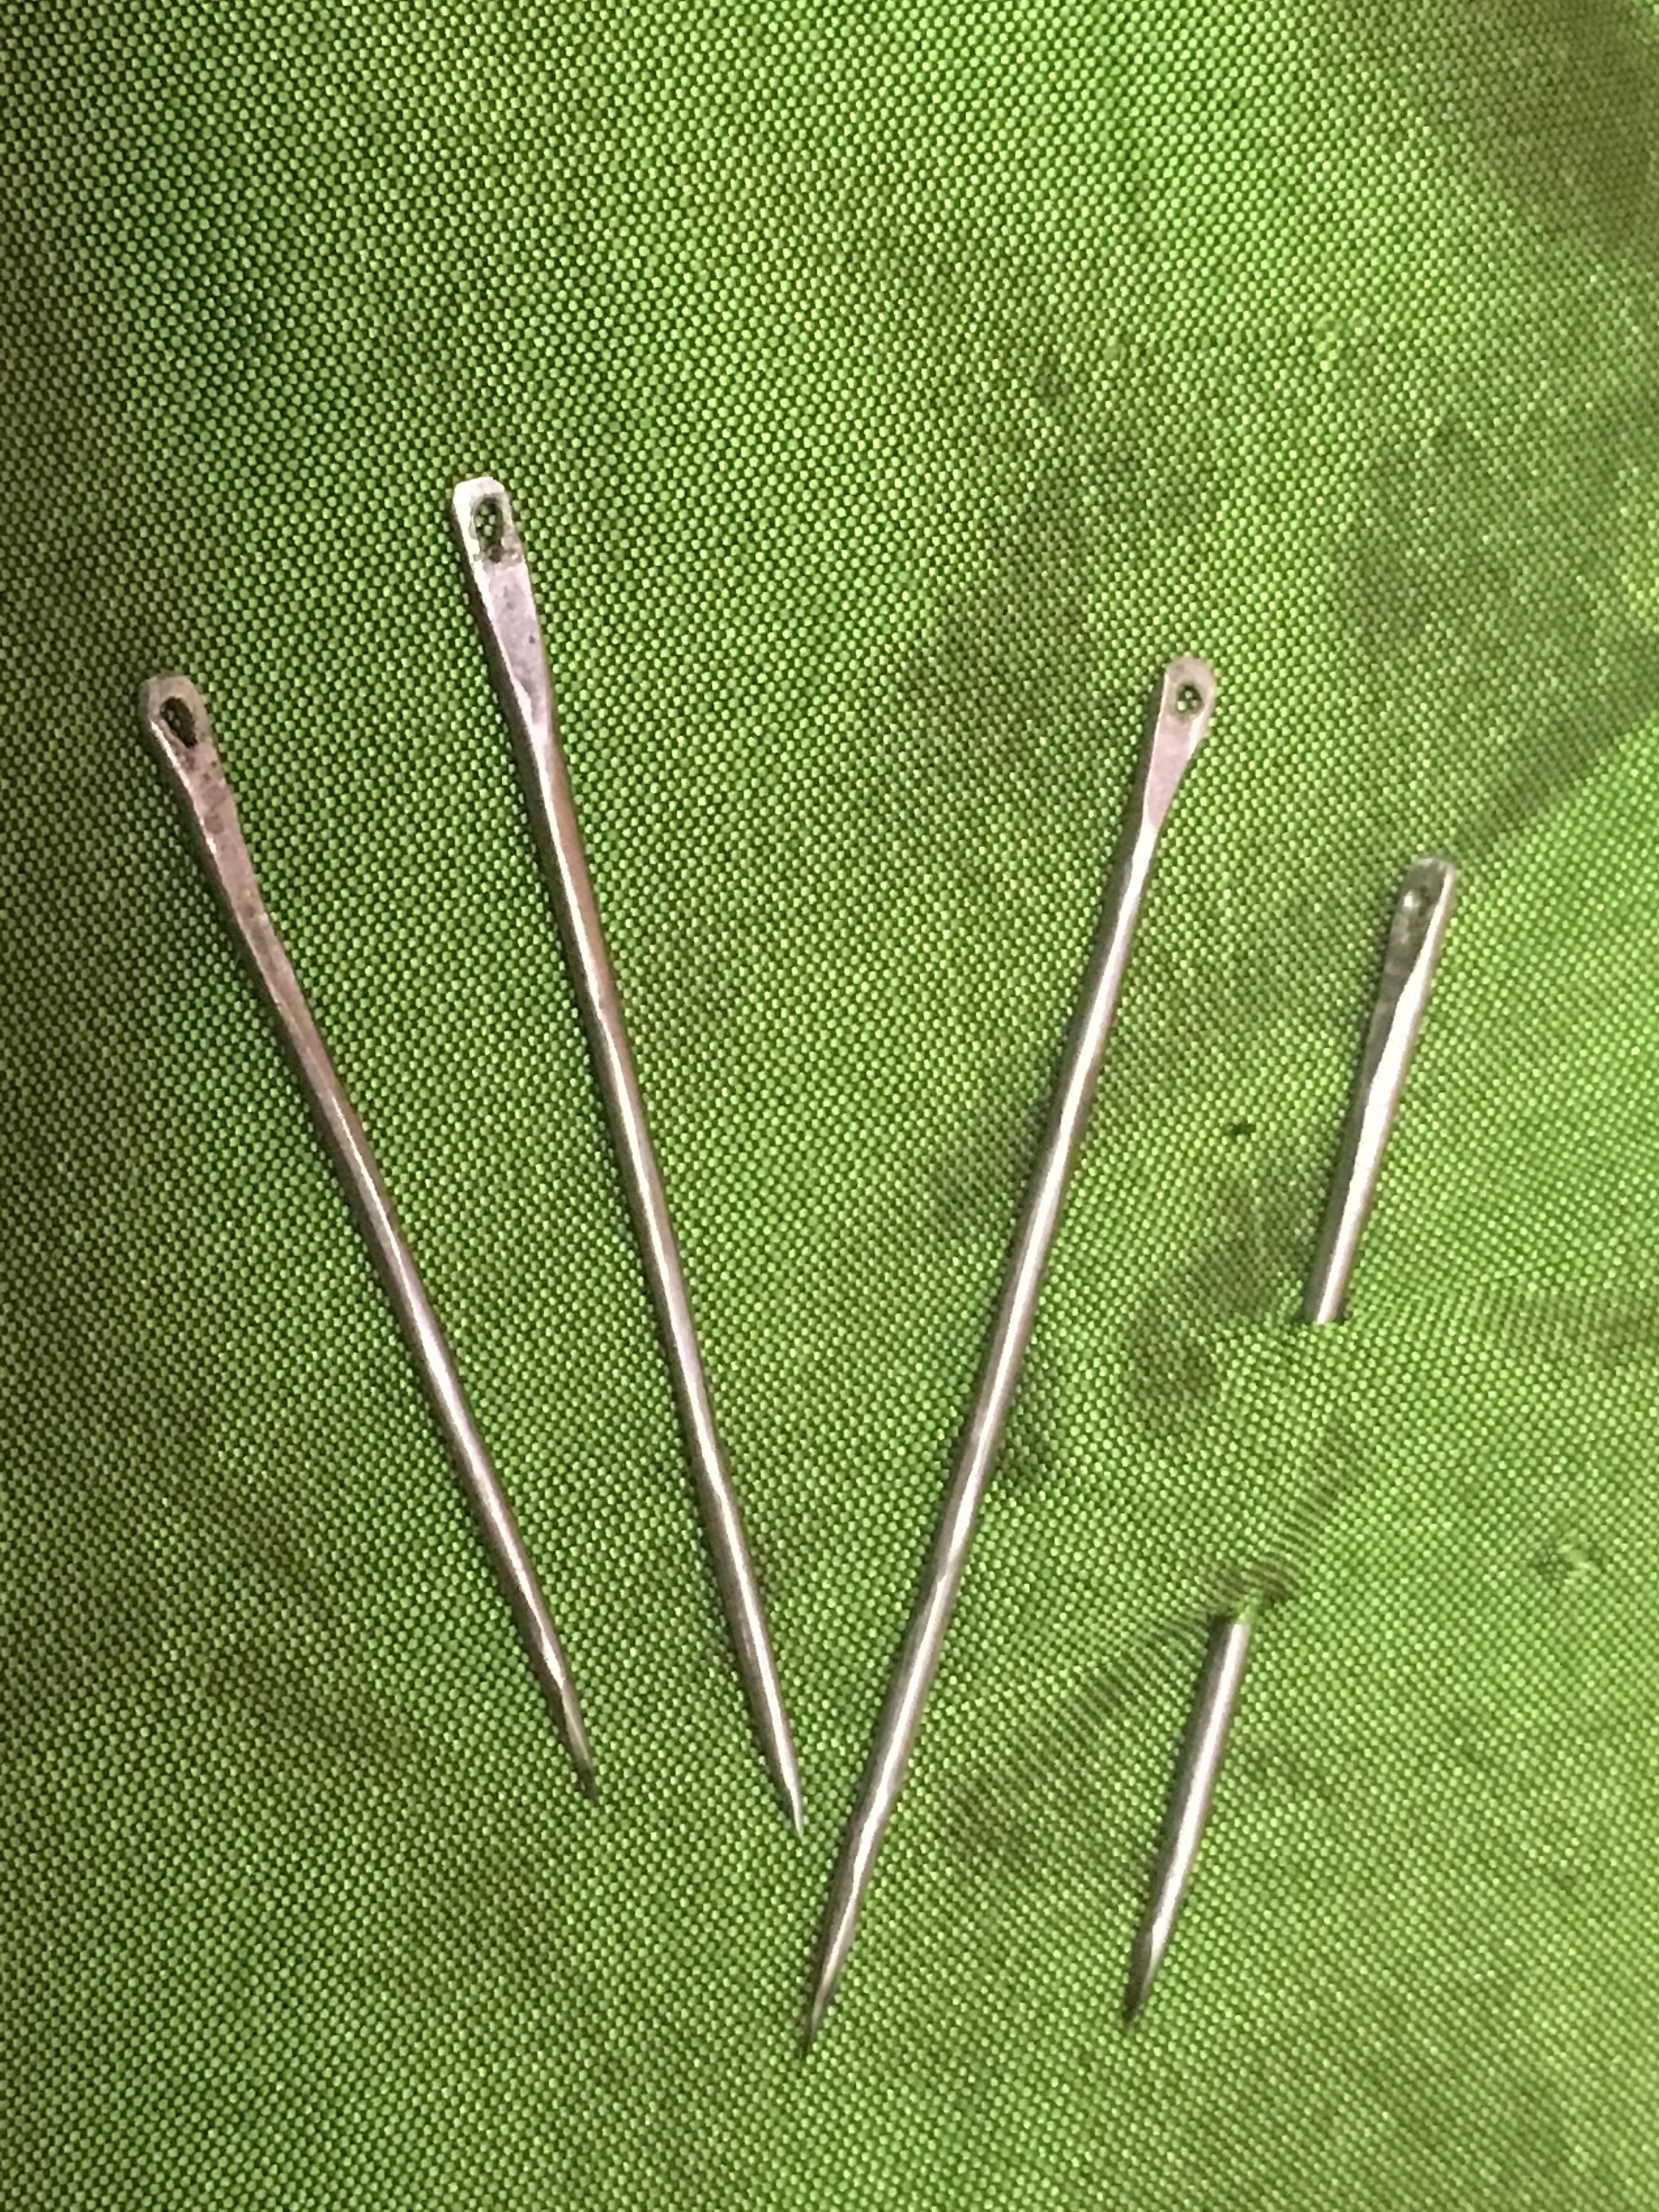 Slide Clasp Closure - A Threaded Needle